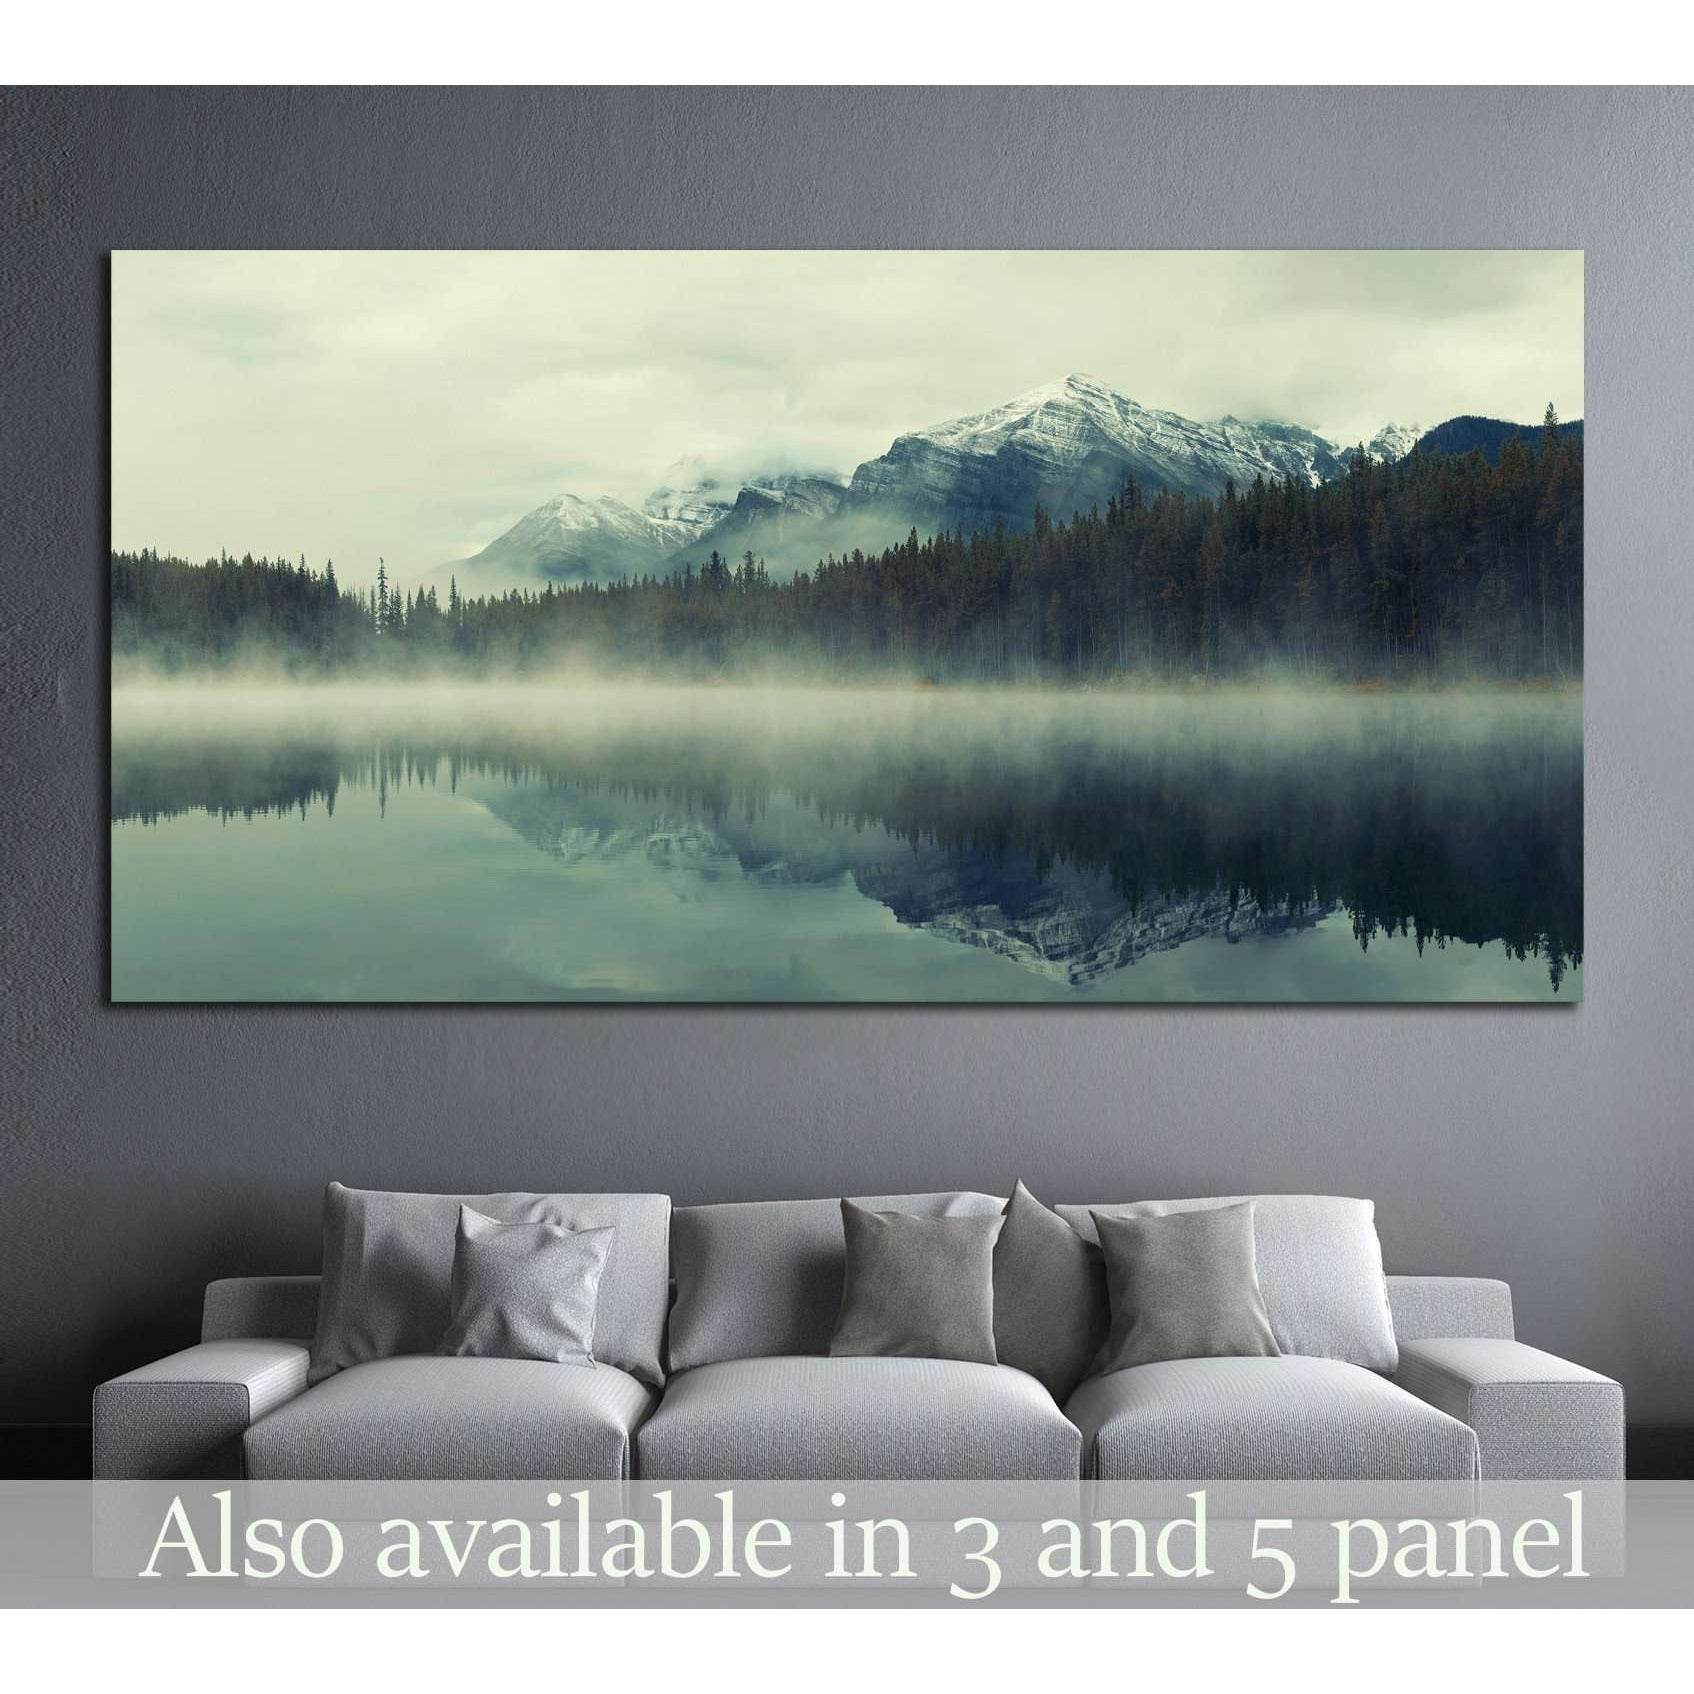 Lake Herbert, Banff National Park, Canada №877 Ready to Hang Canvas Print